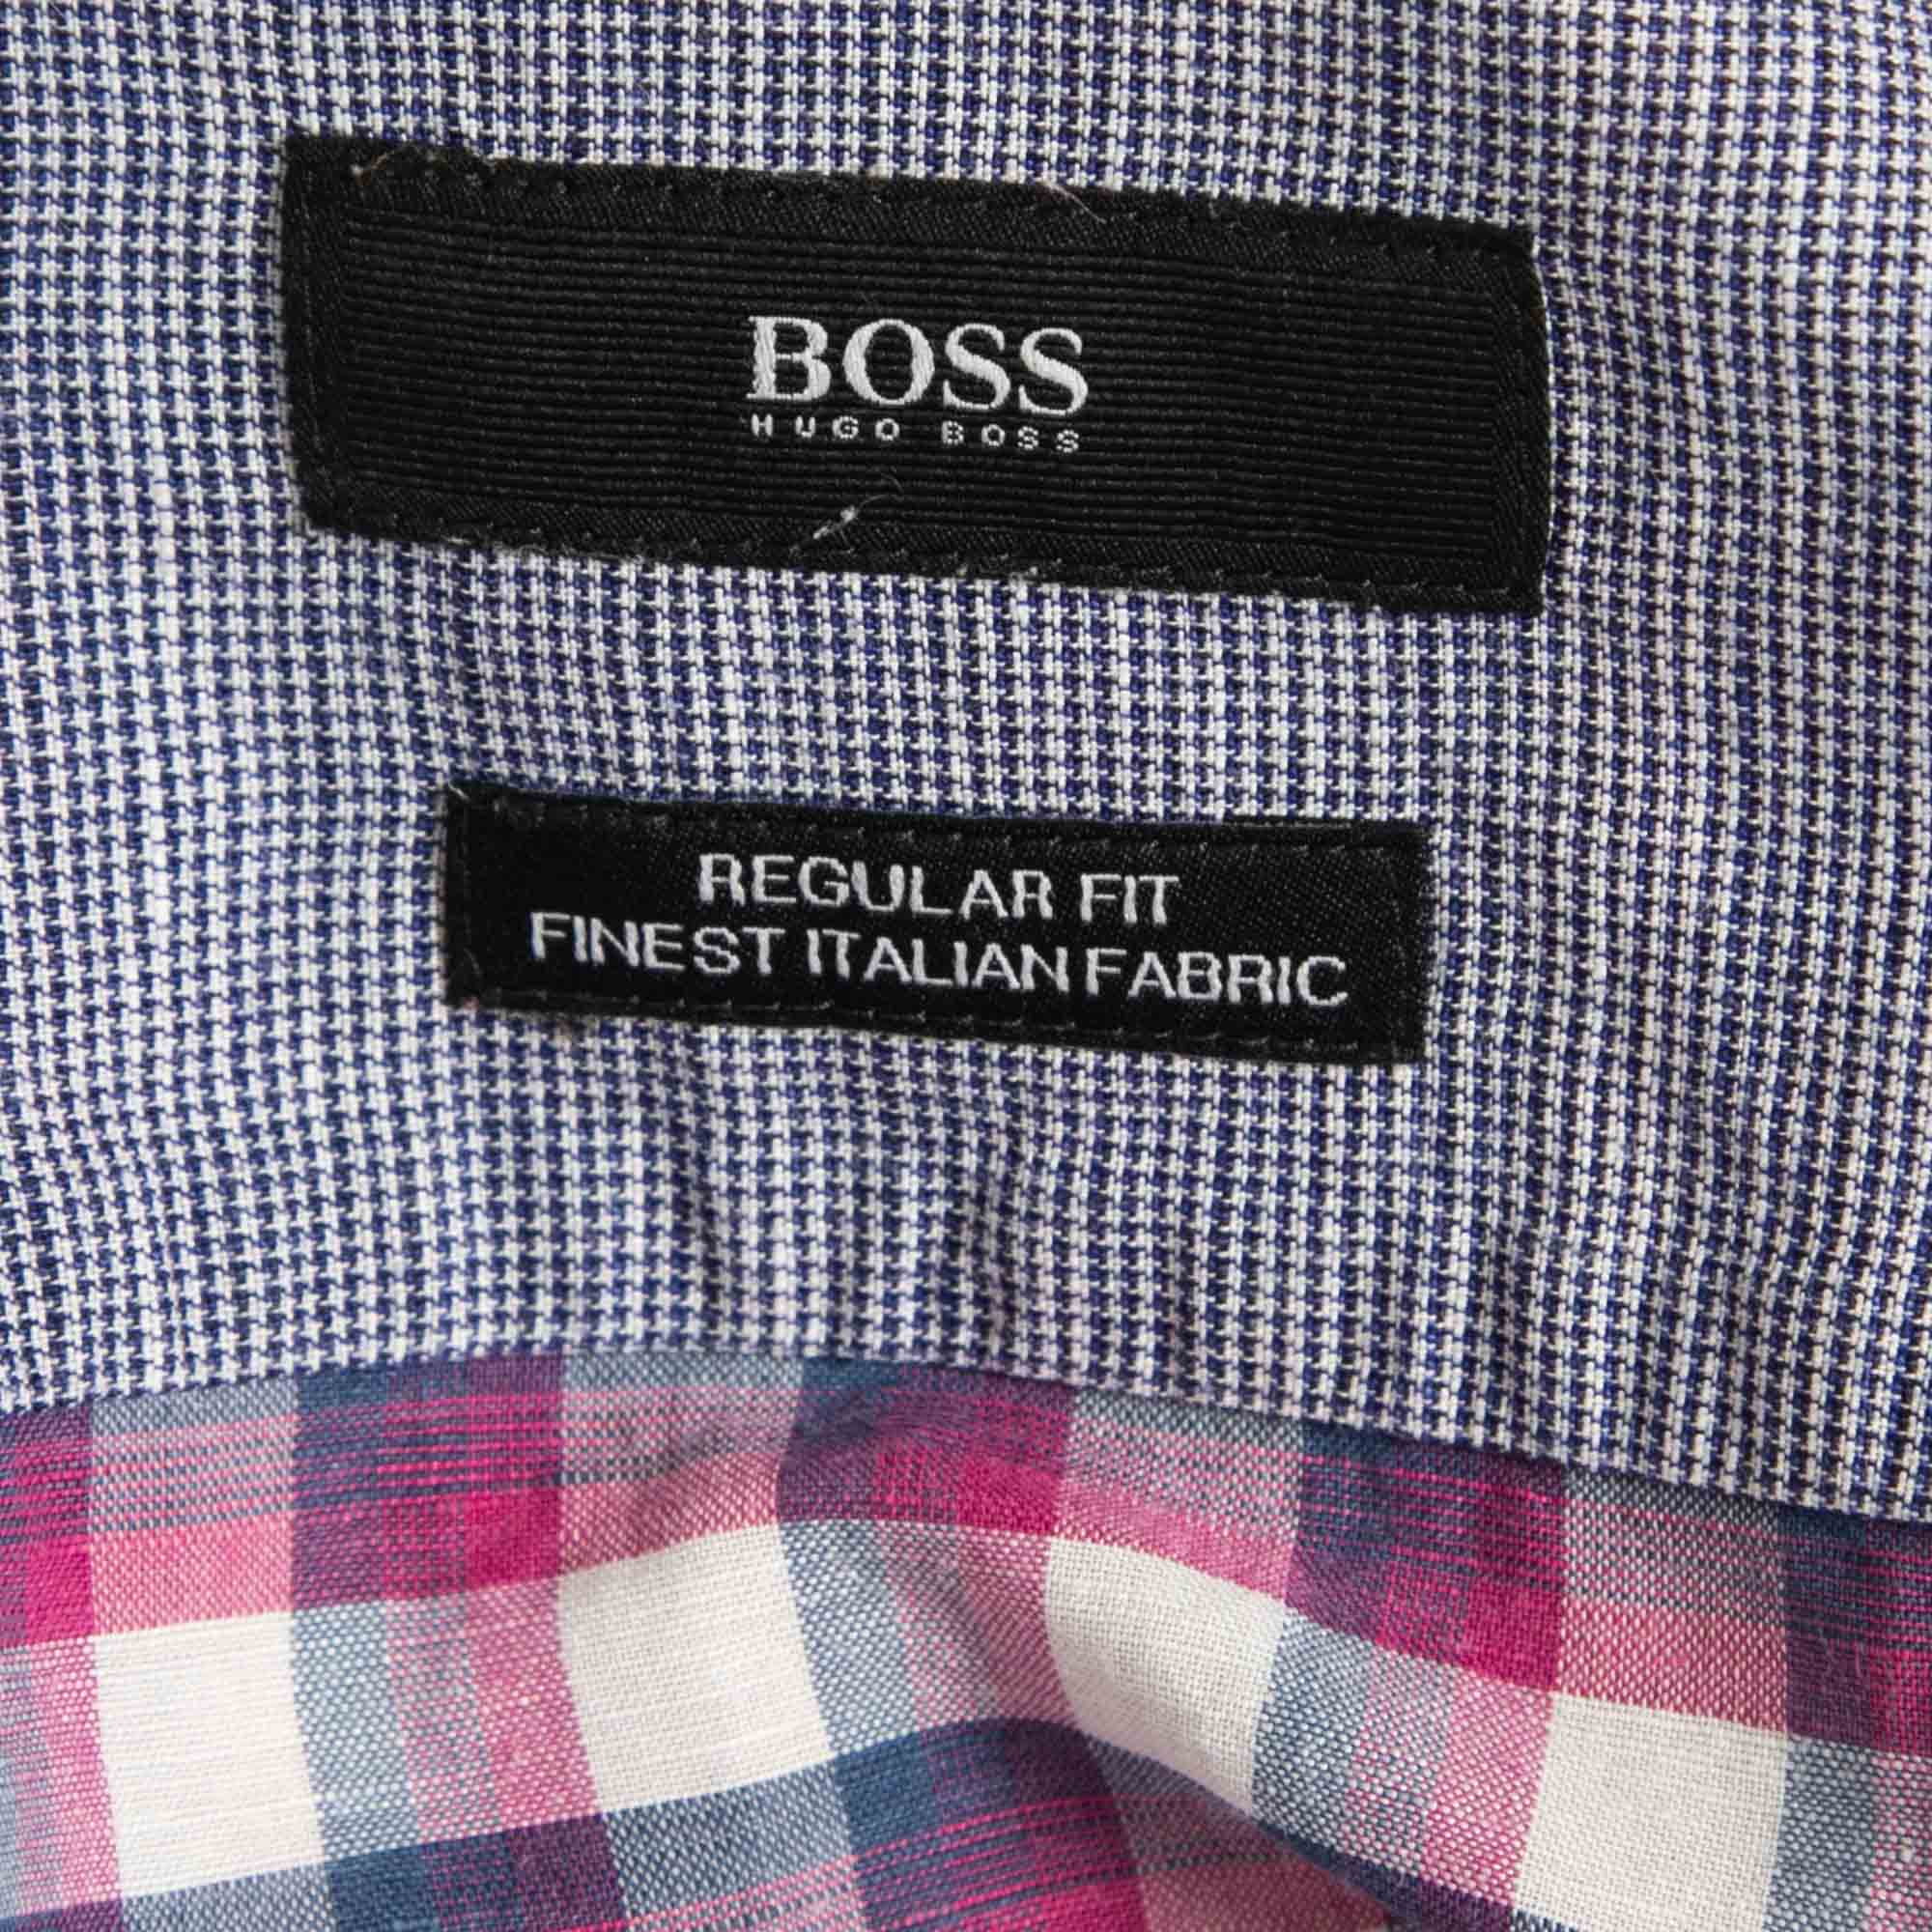 Boss By Hugo Boss Purple/Navy Blue Plaid Cotton Full Sleeve Regular Fit Shirt S